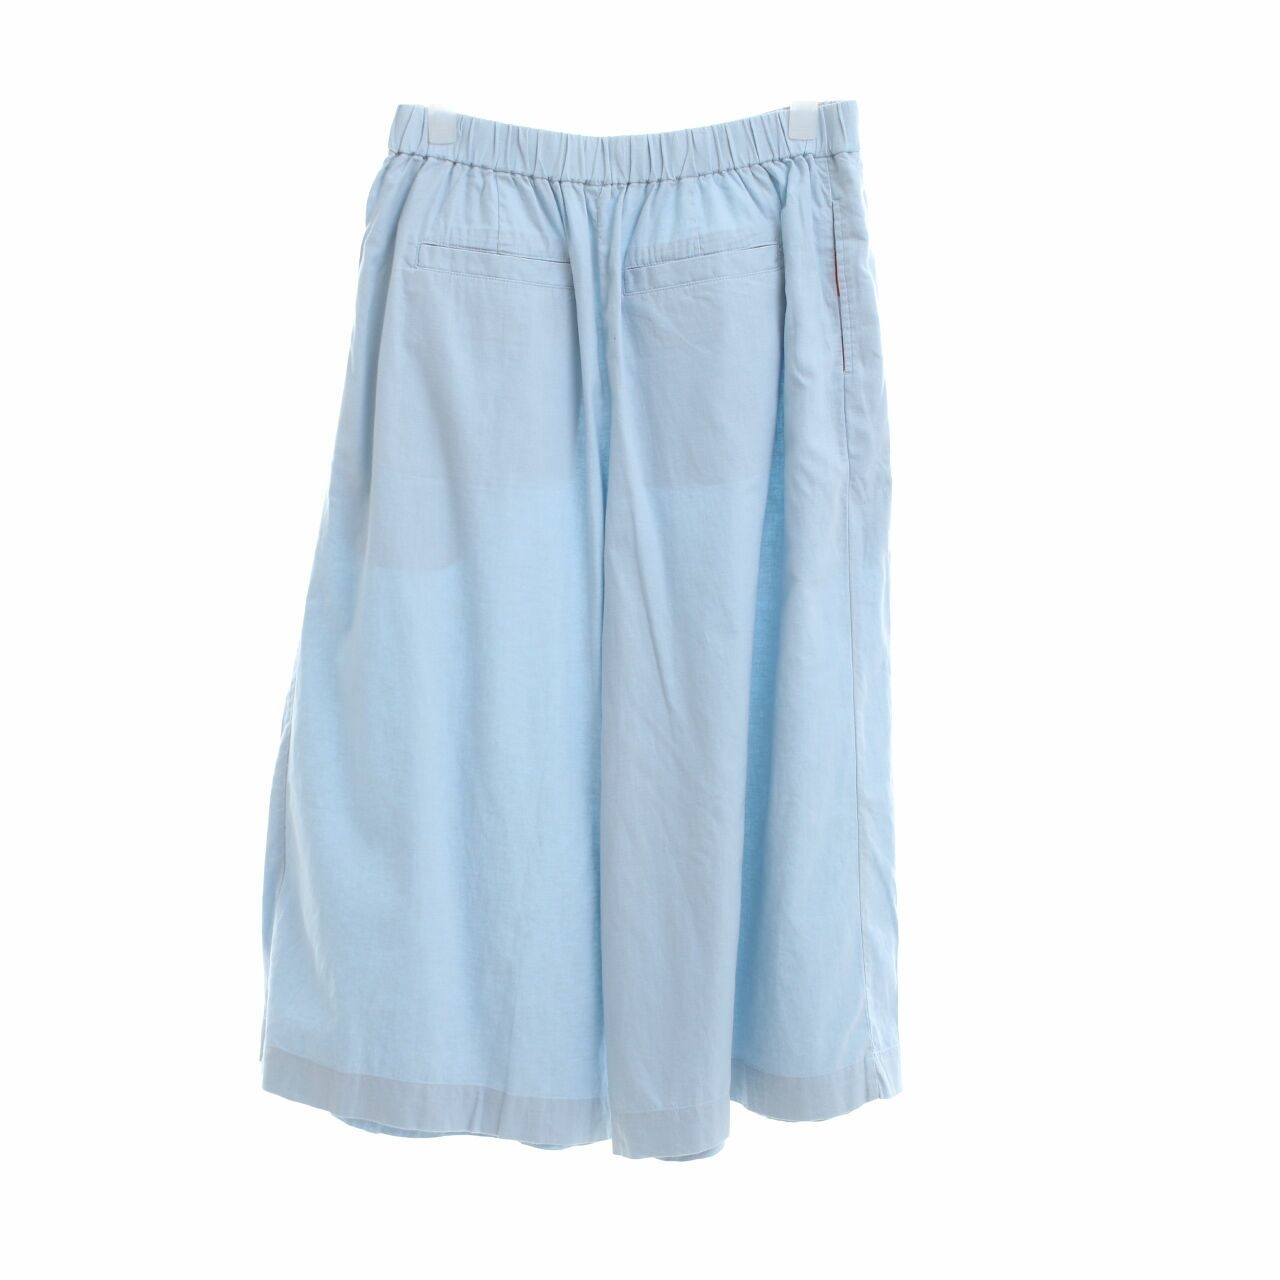 UNIQLO Light Blue Culottes Long pants